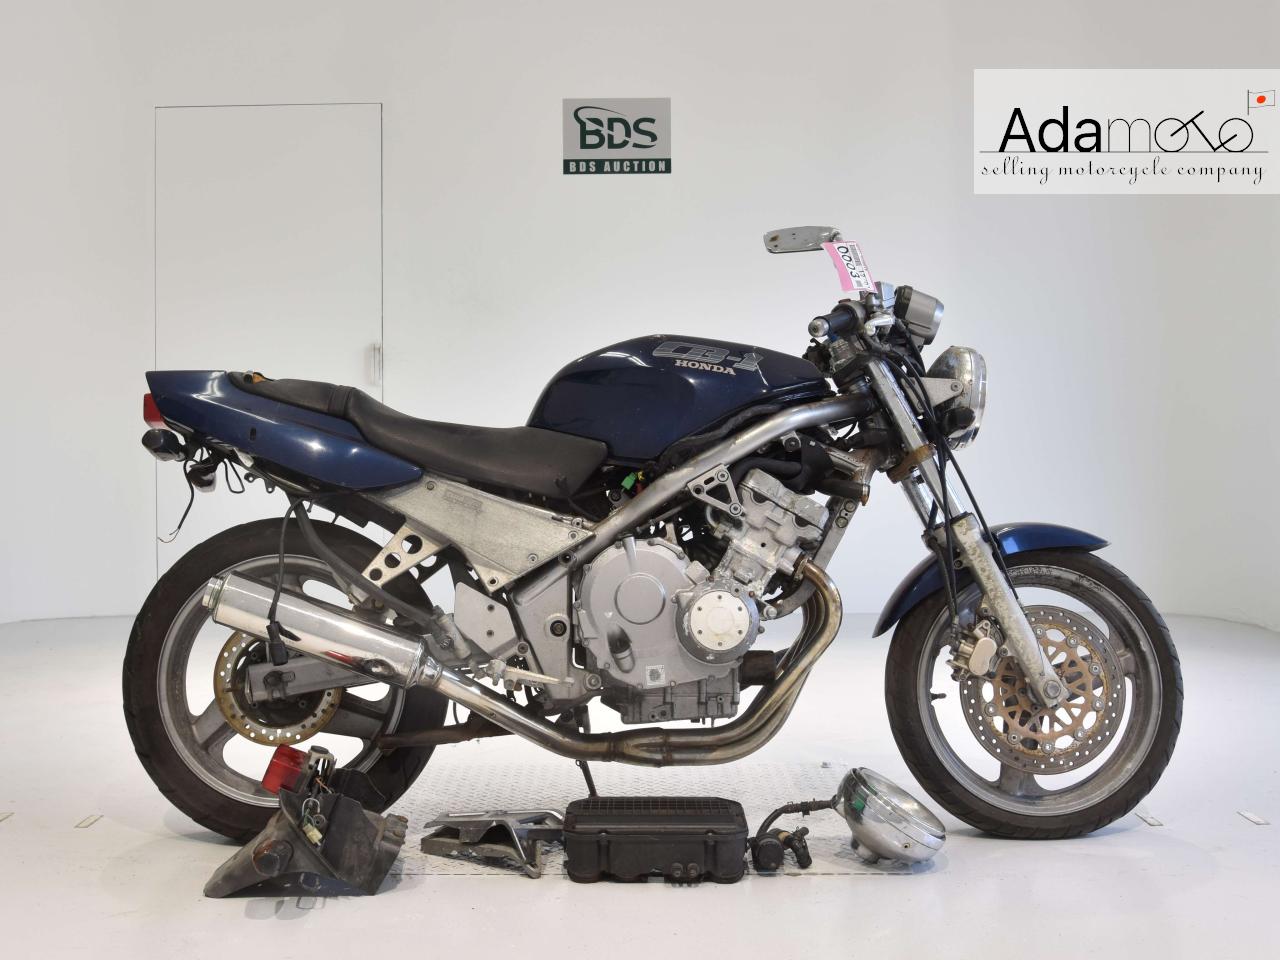 Honda CB 1 Short Inash - Adamoto - Motorcycles from Japan